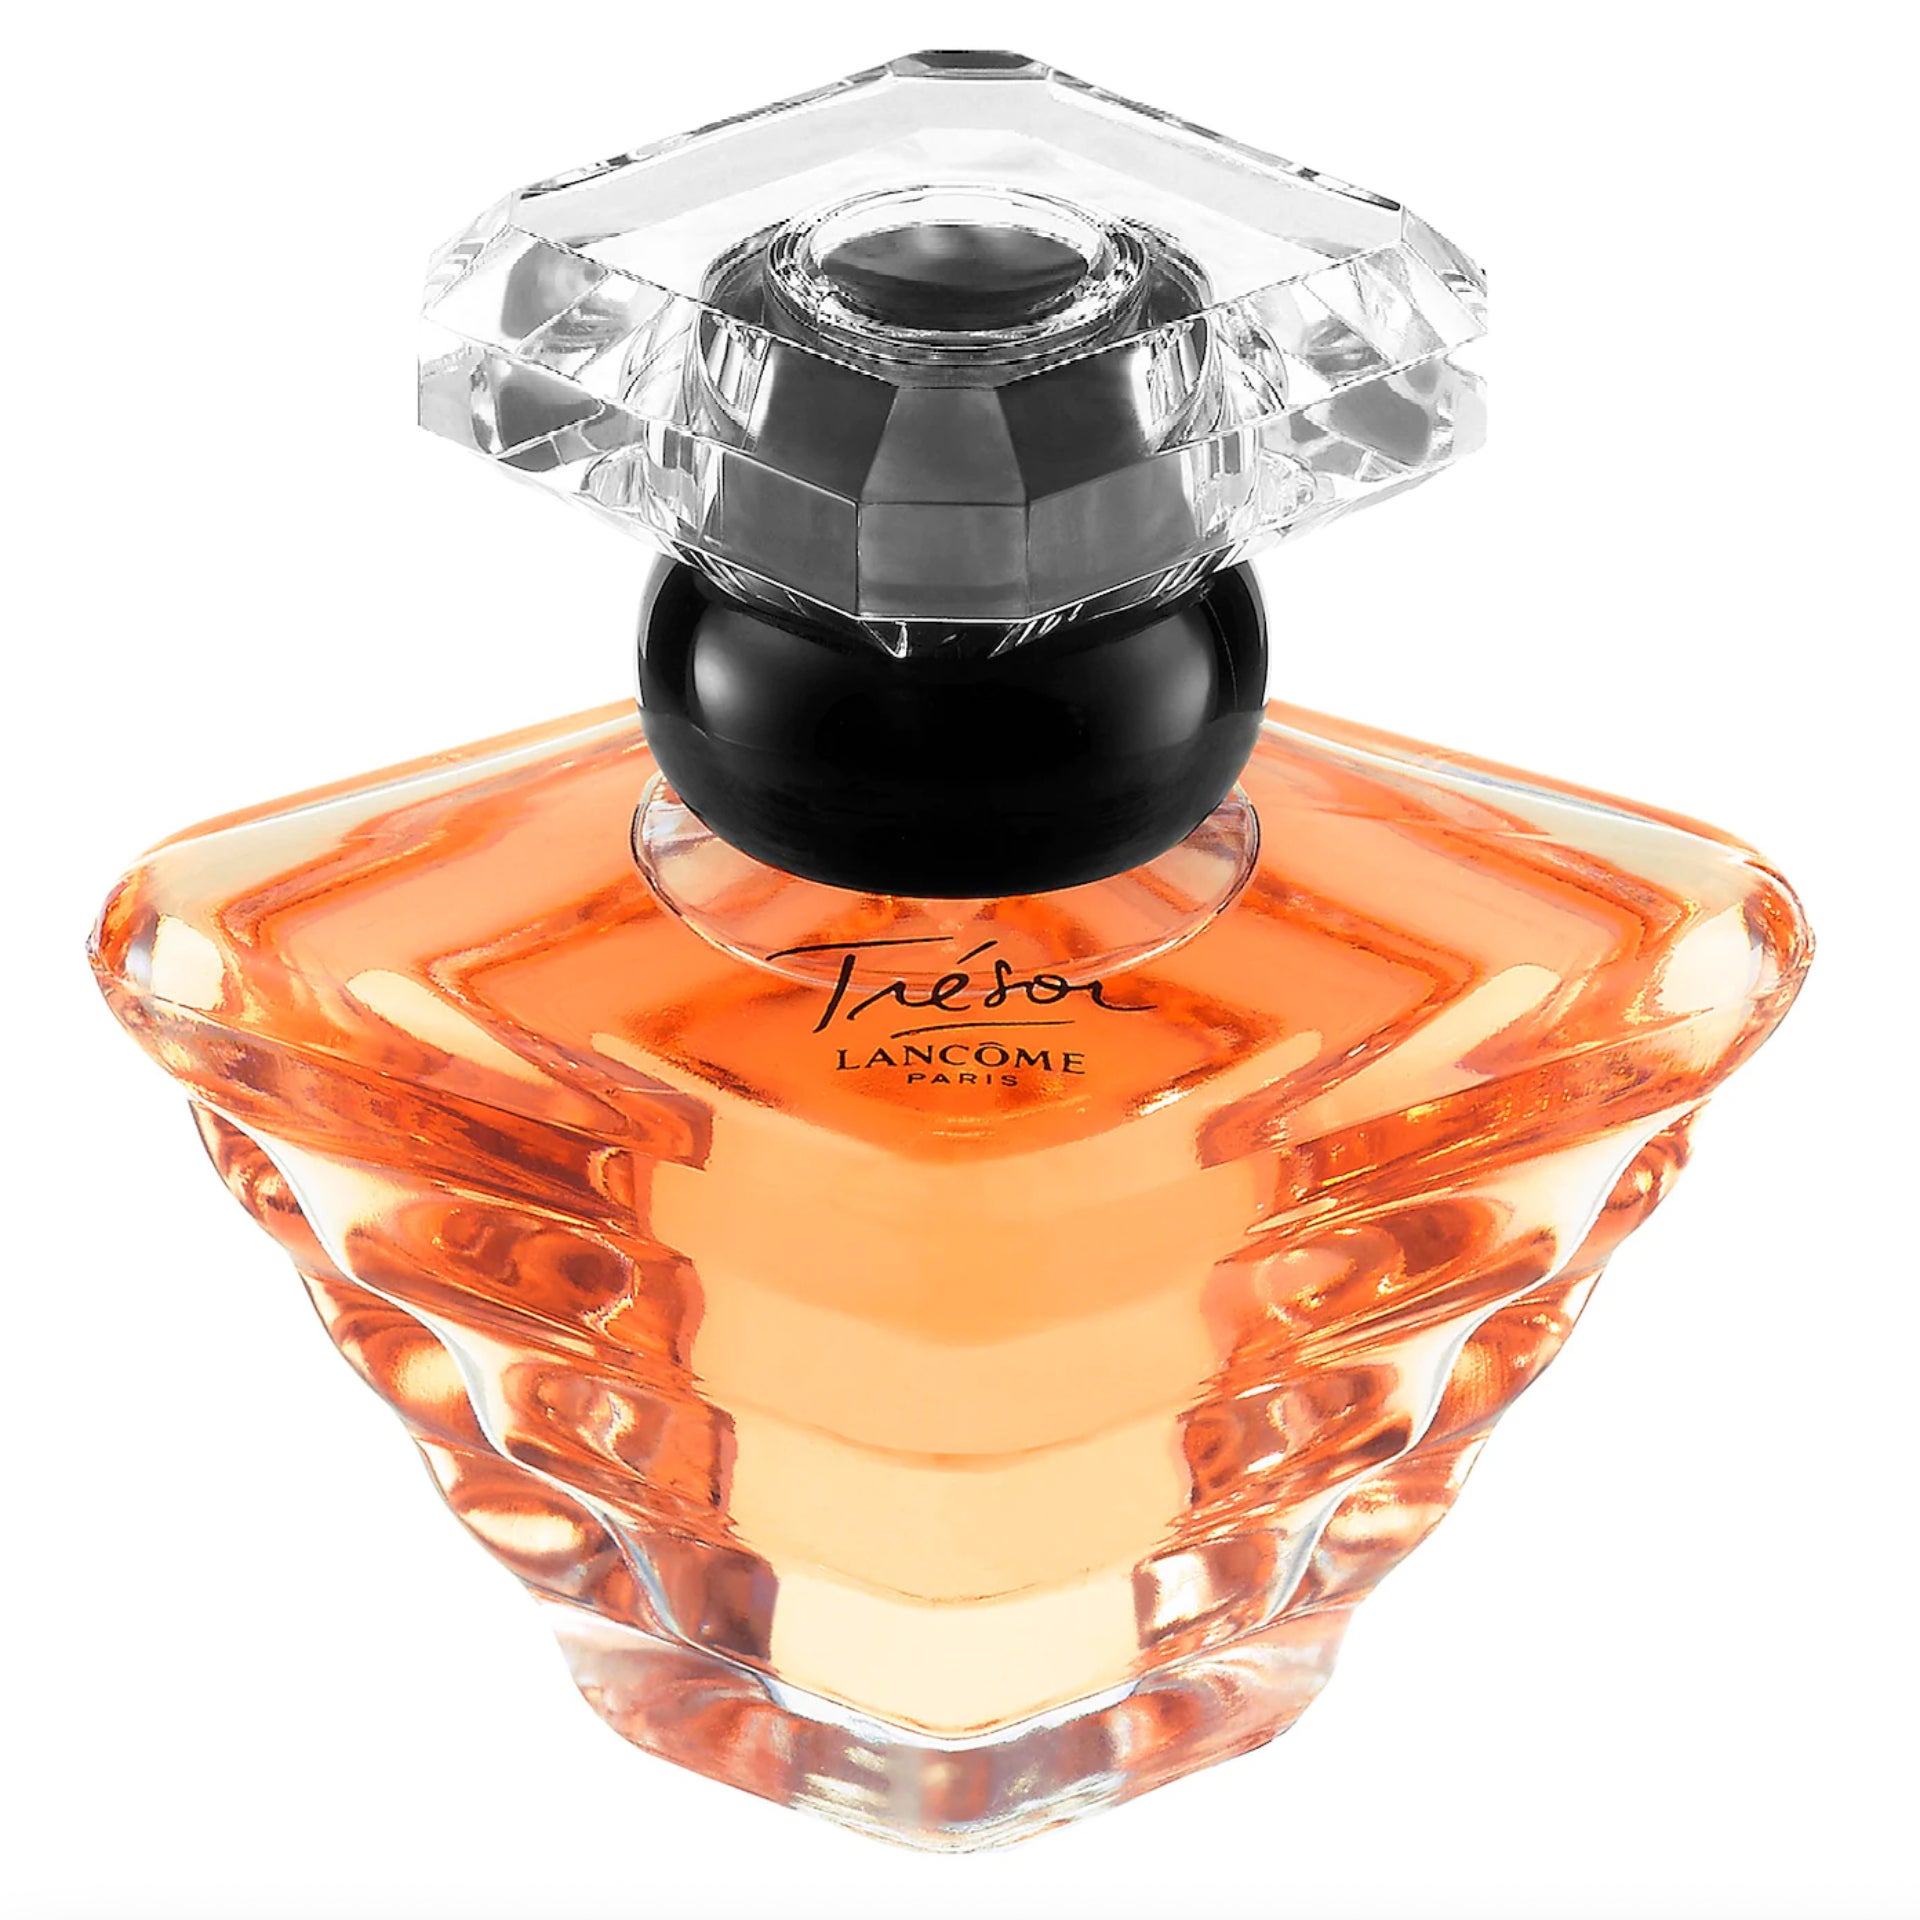 Sephora's Fragrance For All Event Sale Deserves Your Full Attention